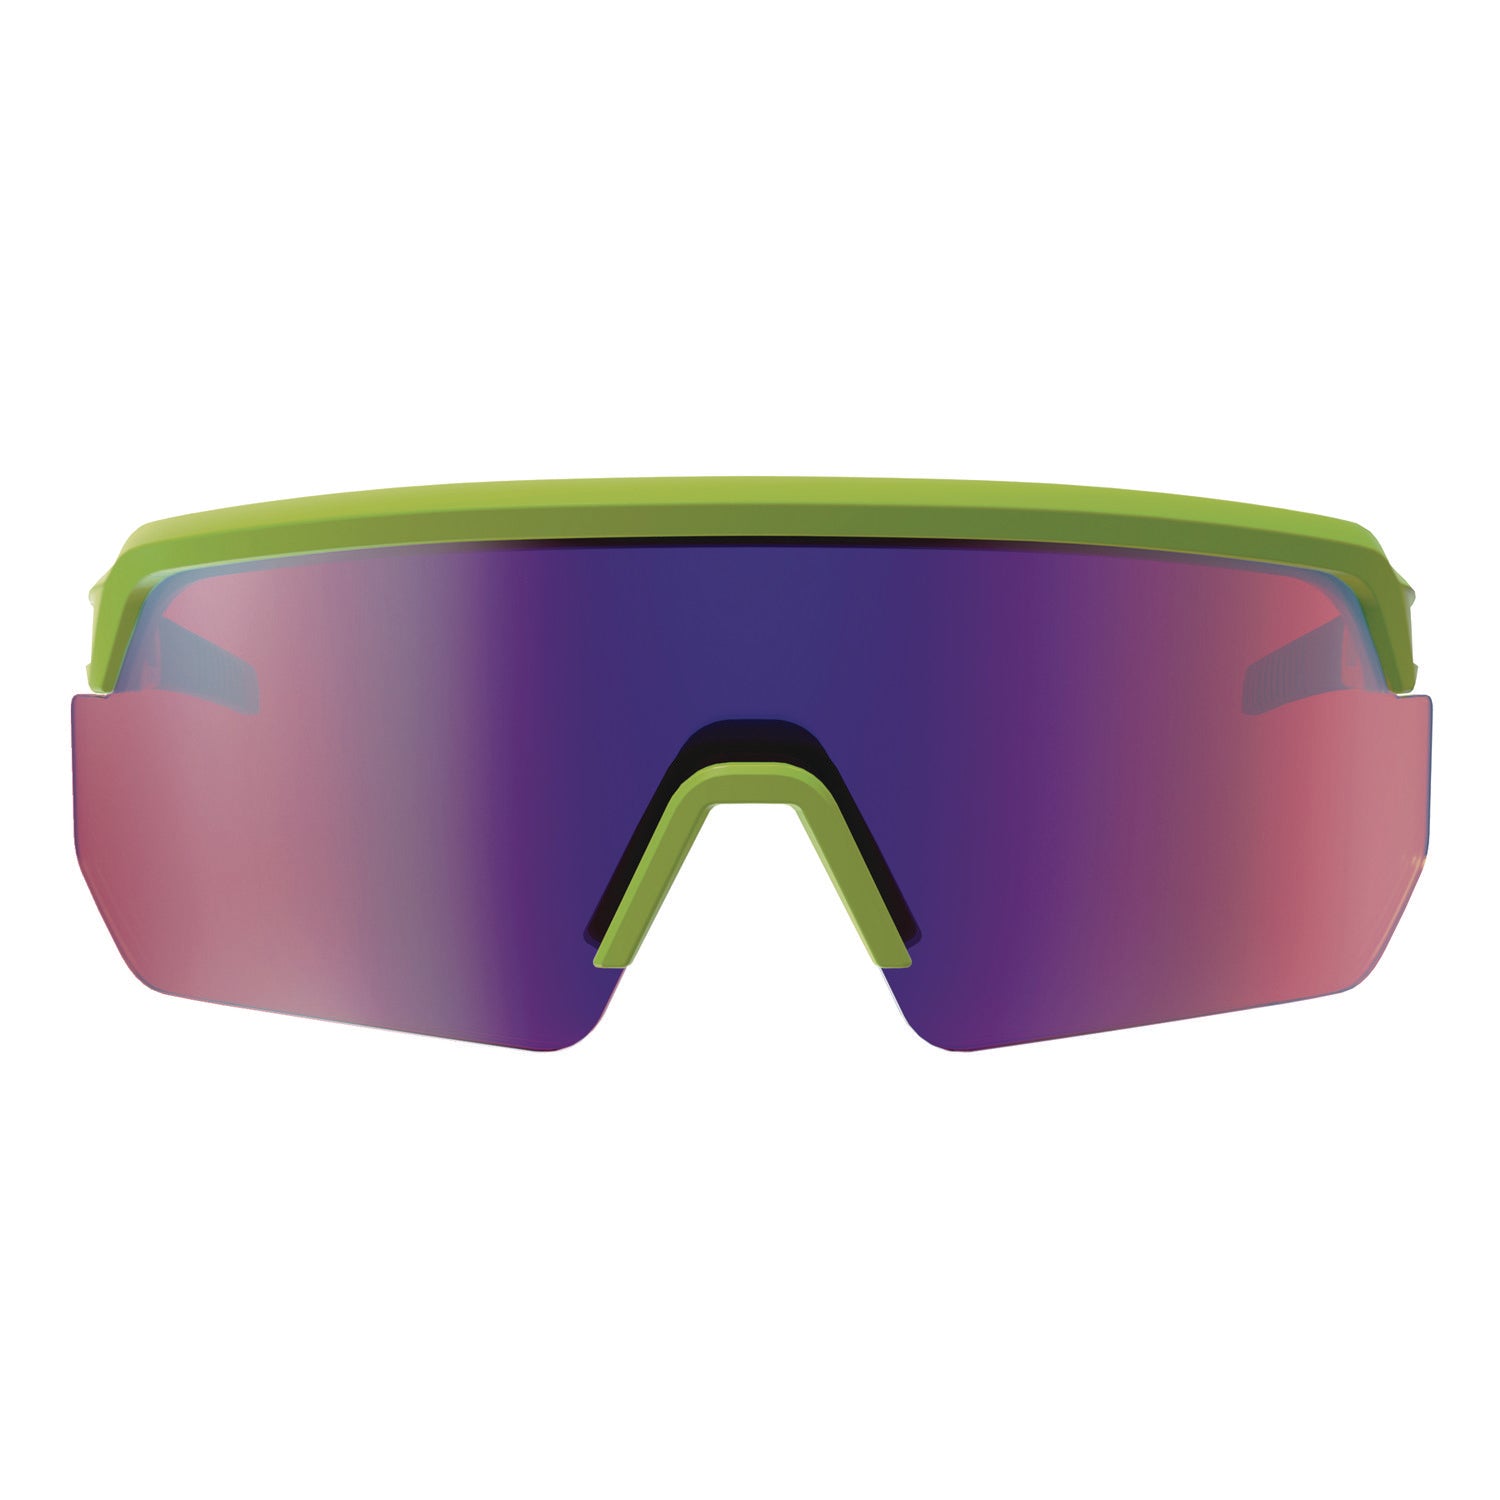 skullerz-aegir-anti-scratch-anti-fog-safety-glasses-lime-nylon-impact-frame-purple-mirror-lens-ships-in-1-3-bus-days_ego55016 - 2